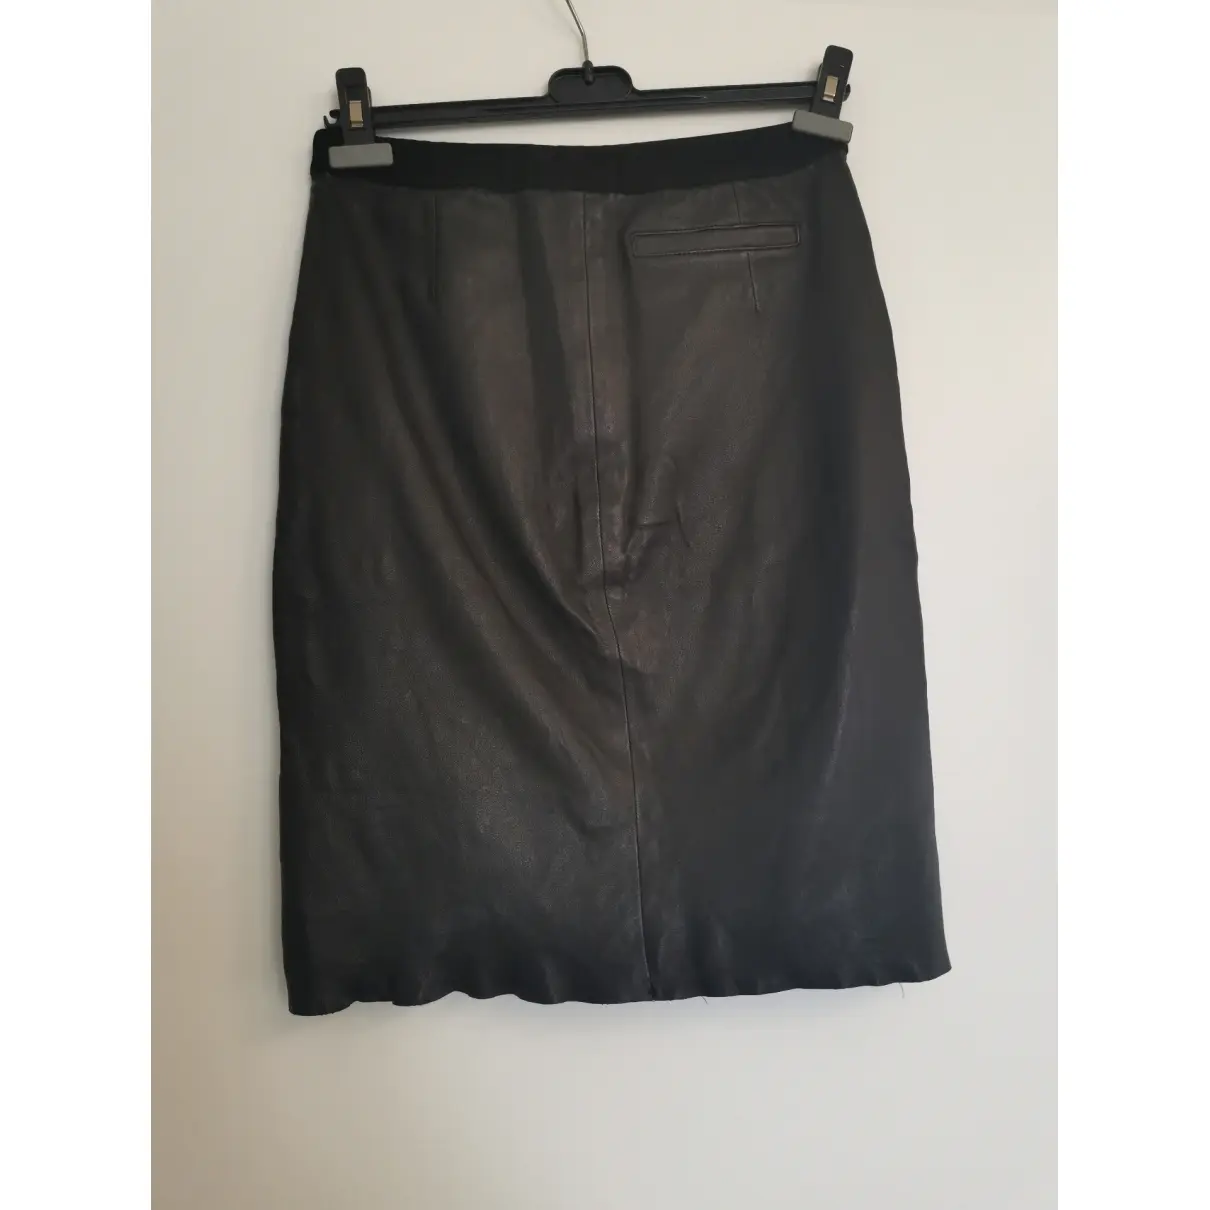 Buy Enes Leather mini skirt online